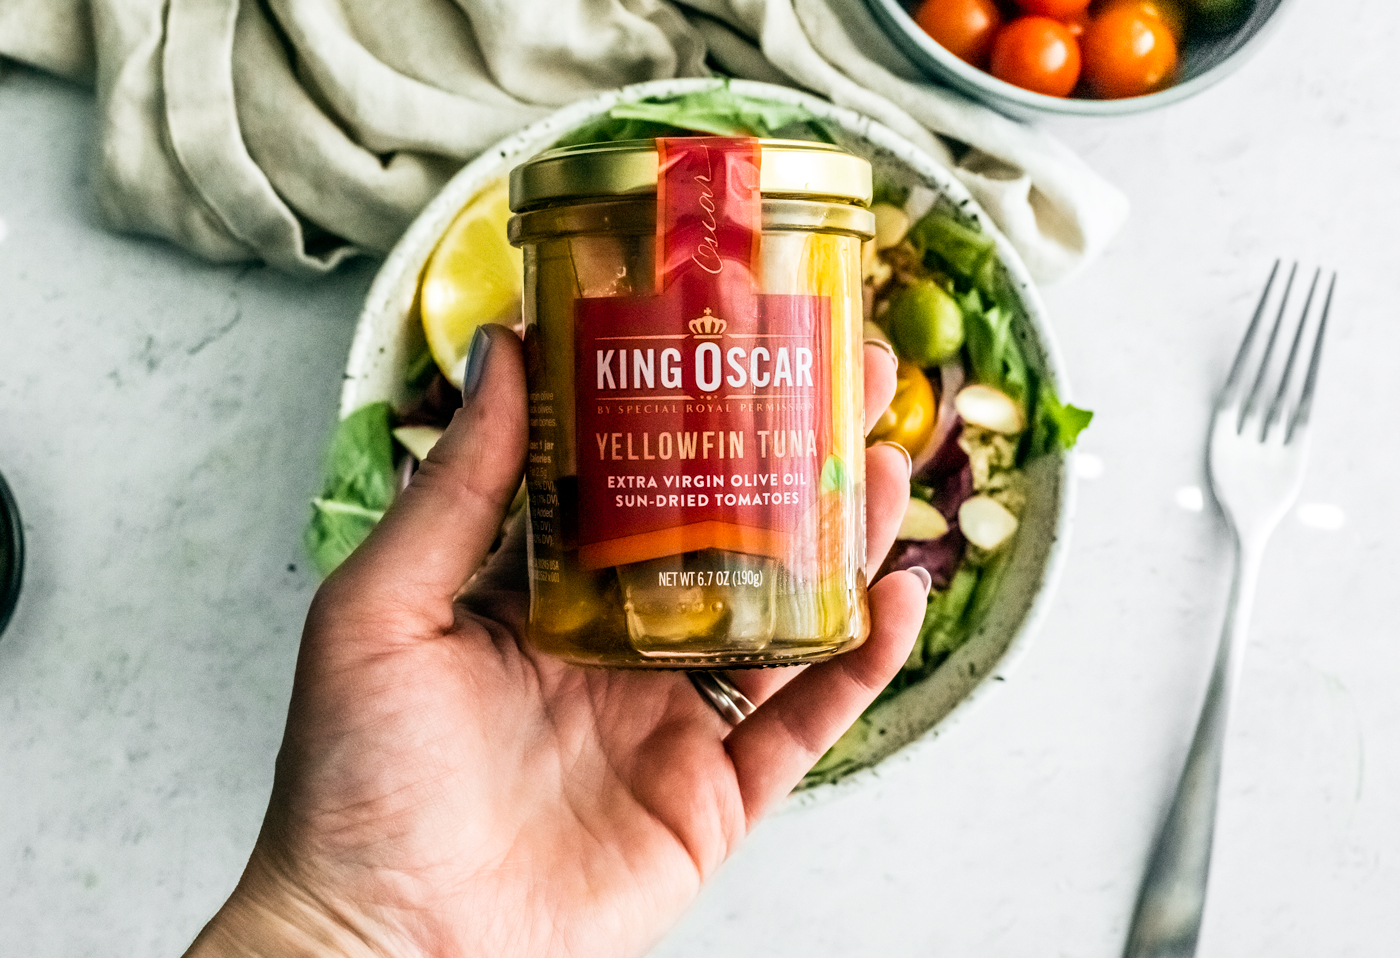 Hand holding up glass jar of King Oscar tuna fillets over salad in background.